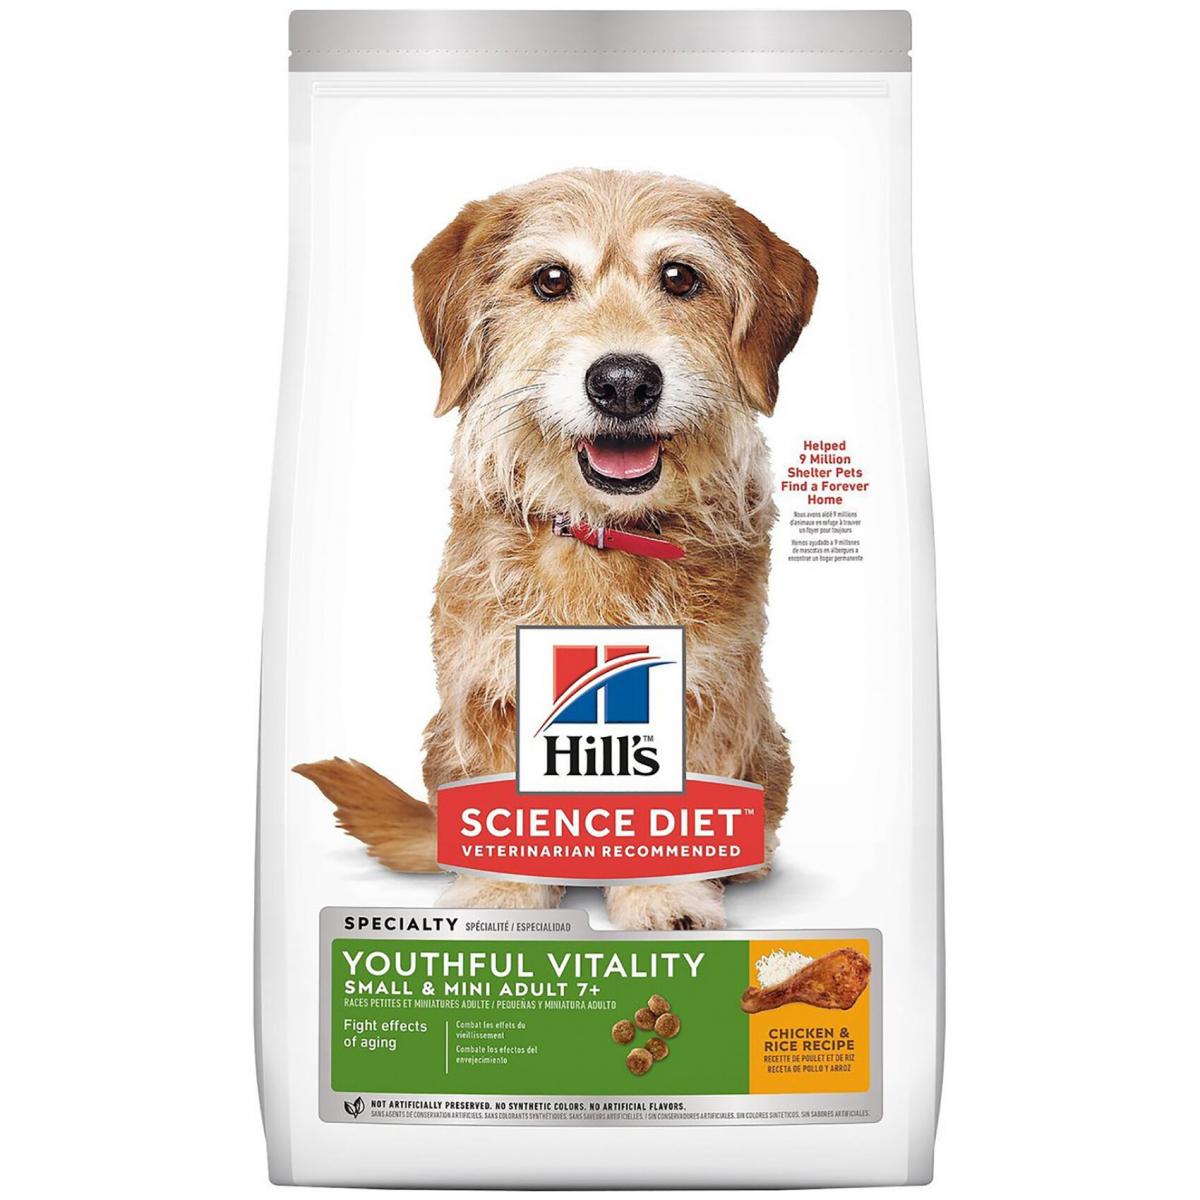 Canine 7+ Yourhful Vitality Small & Mini Adult Recipe Dry Dog Food (3.5LB)